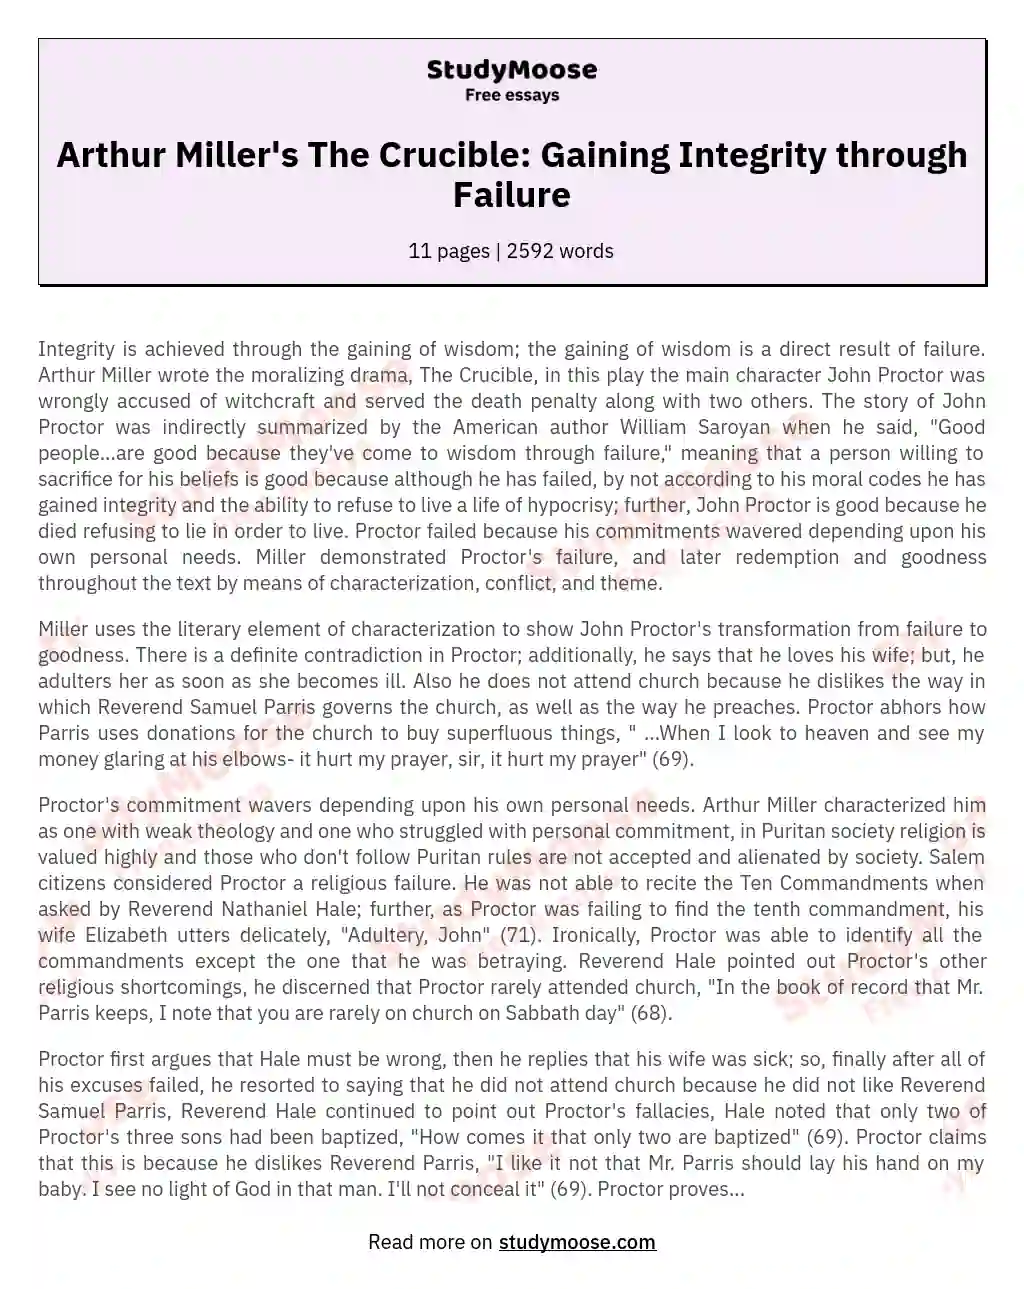 Arthur Miller's The Crucible: Gaining Integrity through Failure